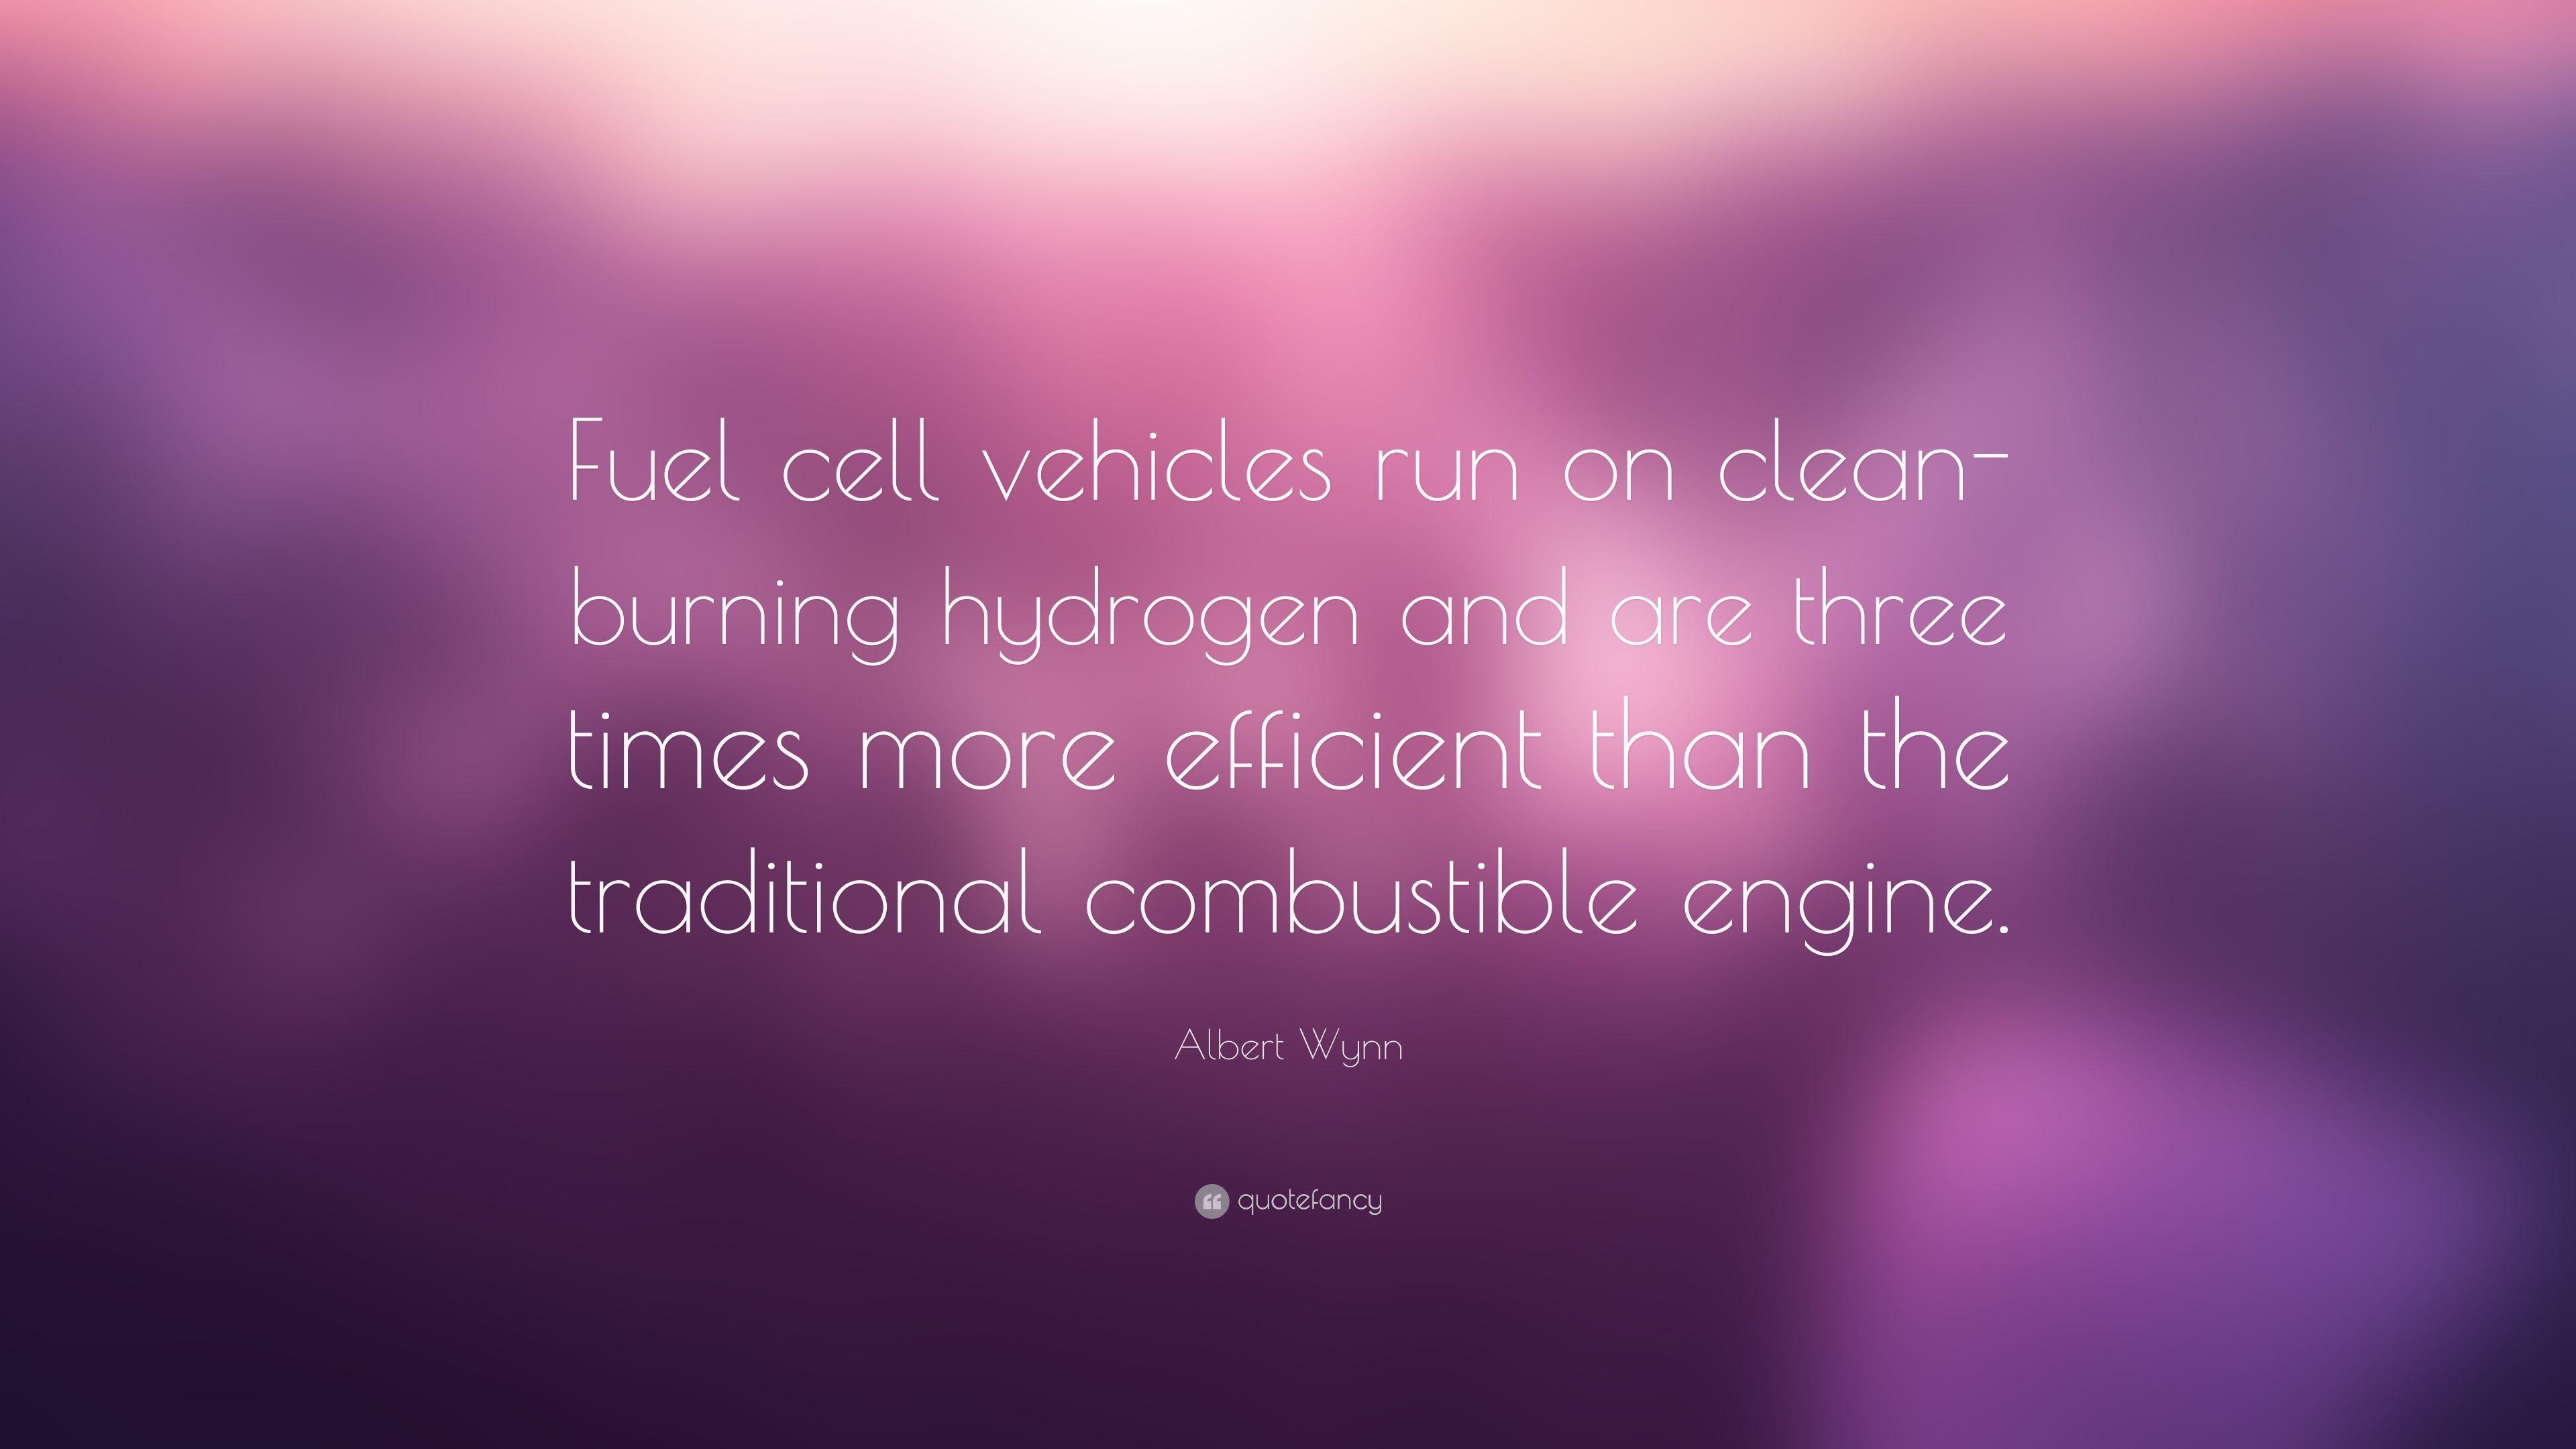 Albert Wynn Quote: “Fuel Cell Vehicles Run On Clean Burning Hydrogen